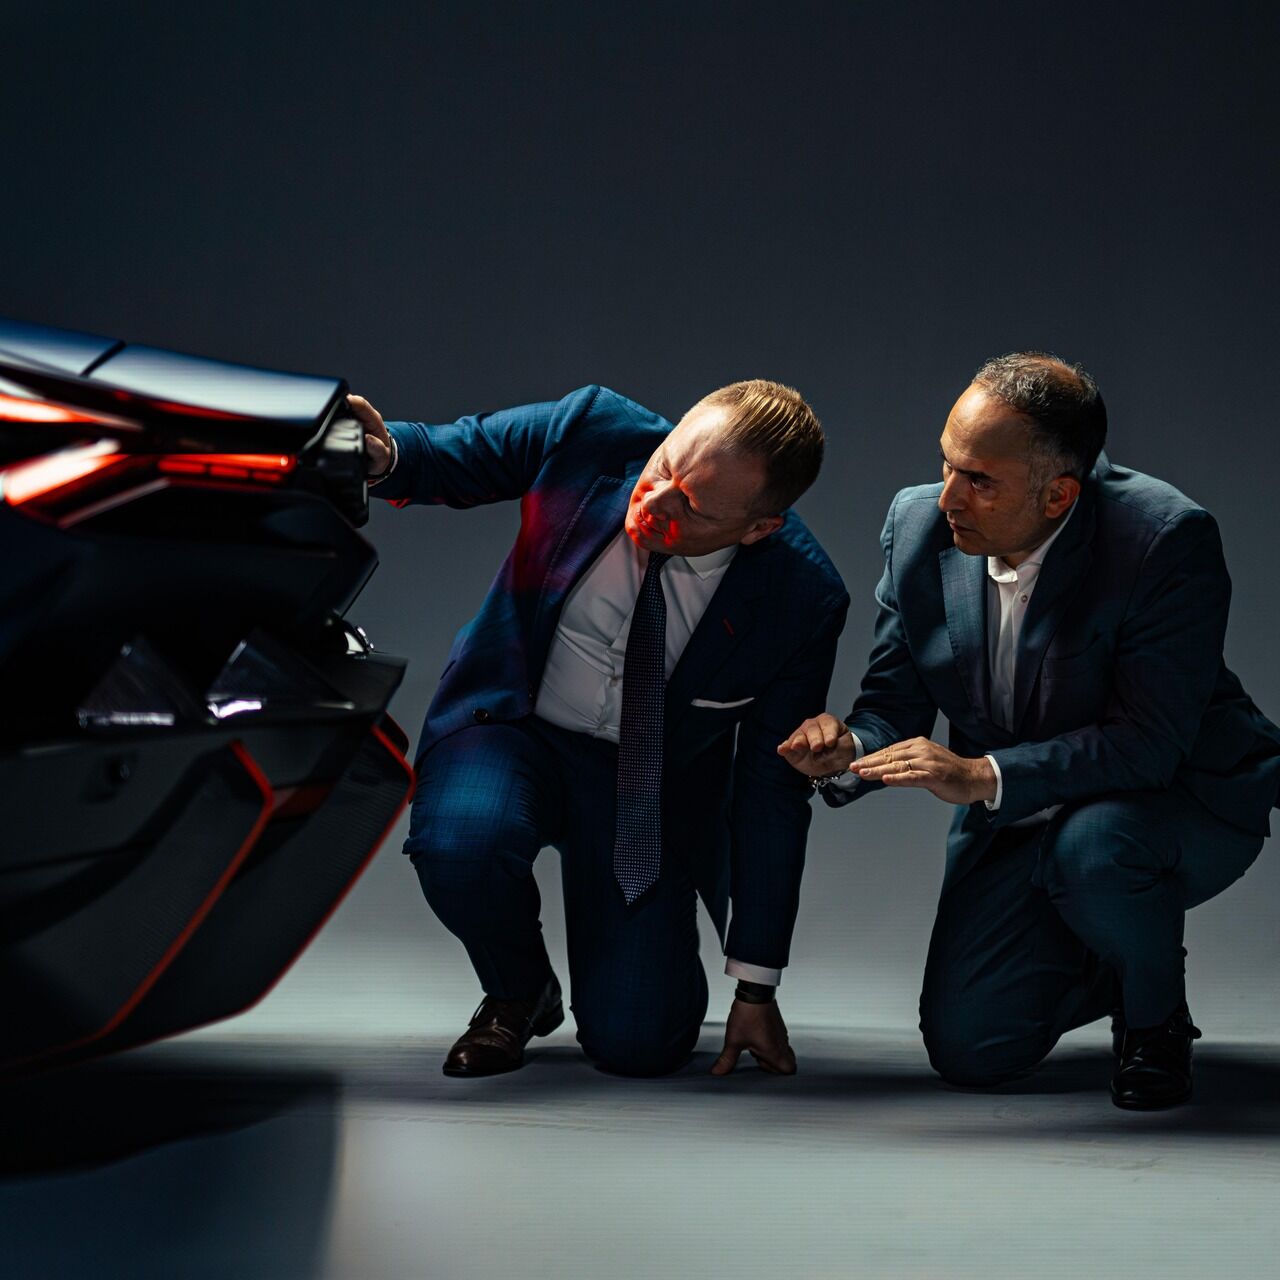 Design and aerodynamics: Mitja Borkert and Ugo Riccio of Automobili Lamborghini